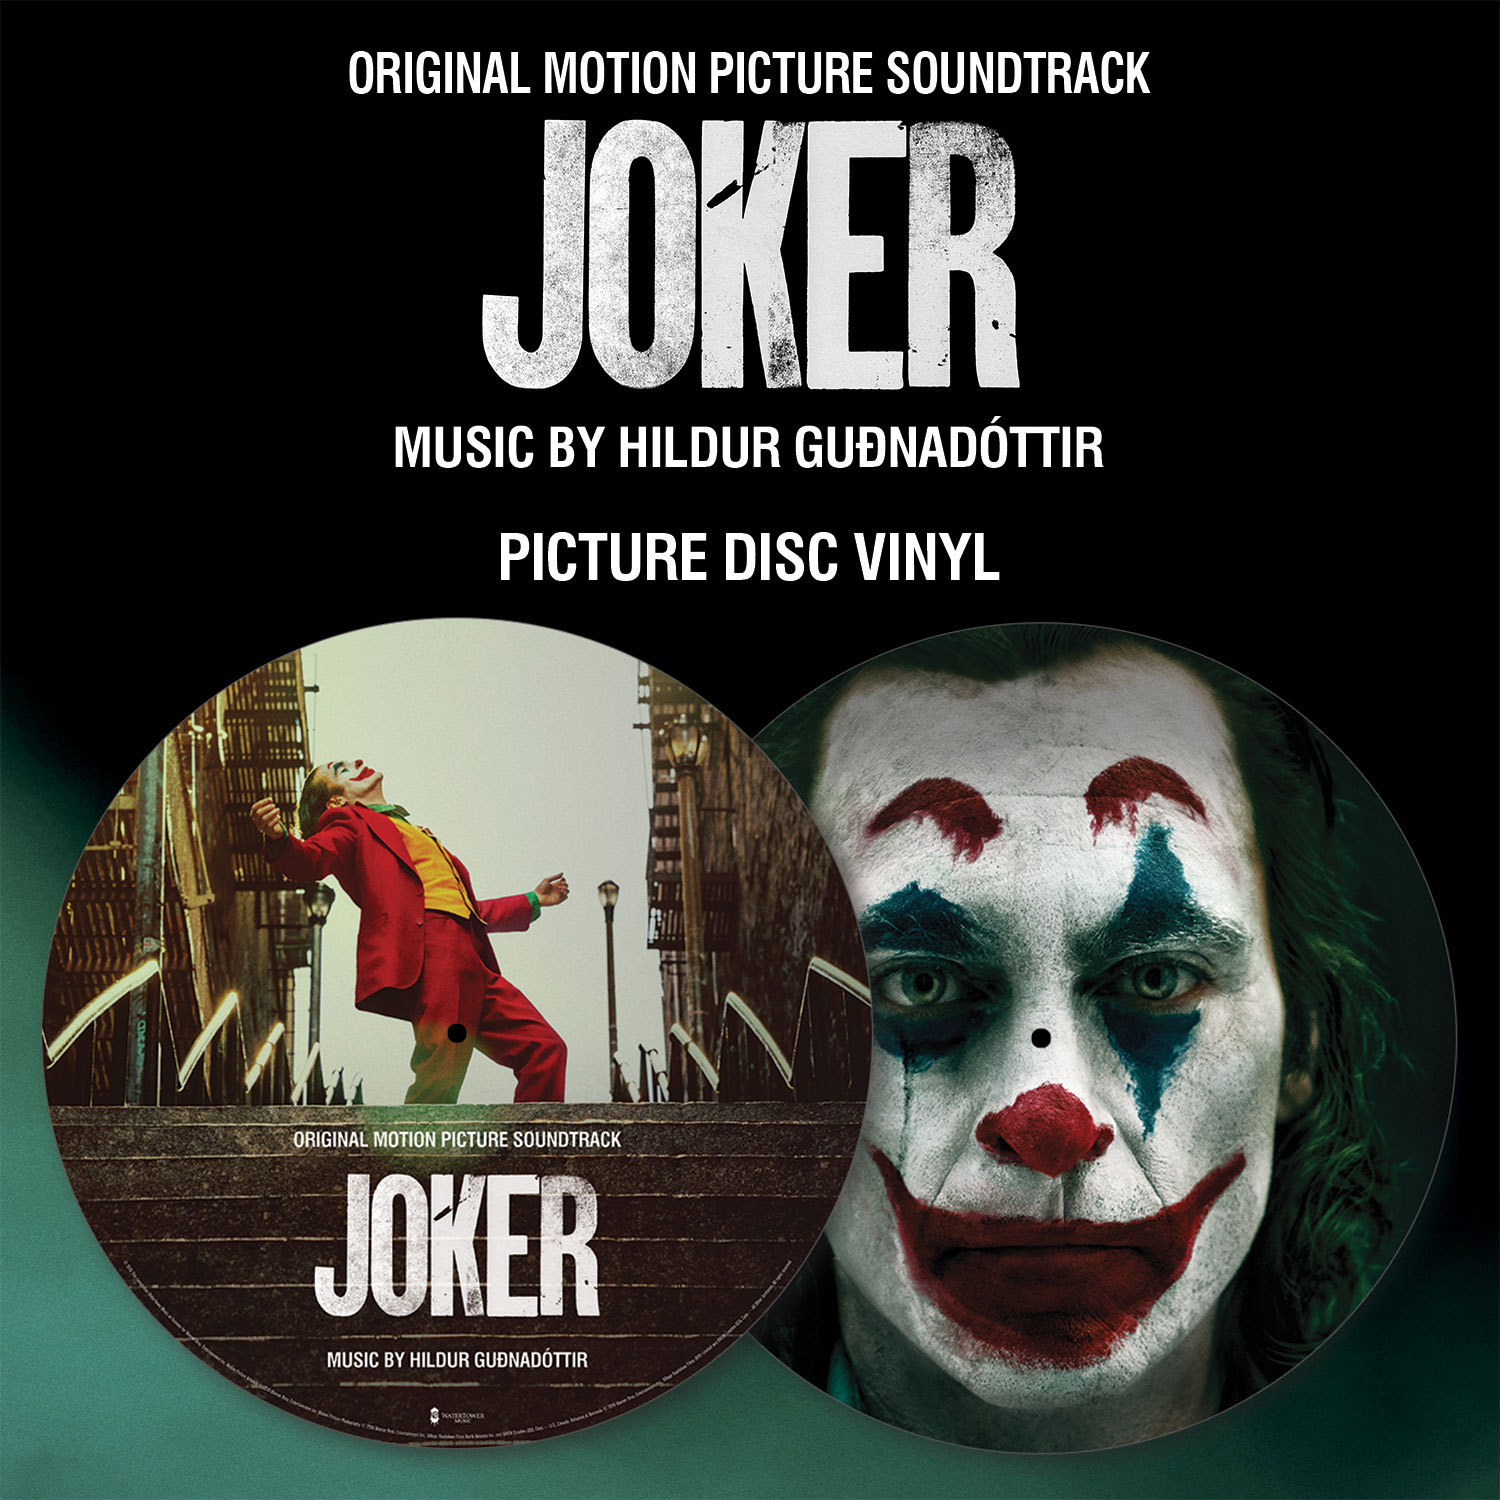 Joker Original Motion Picture Soundtrack Digital Album Now